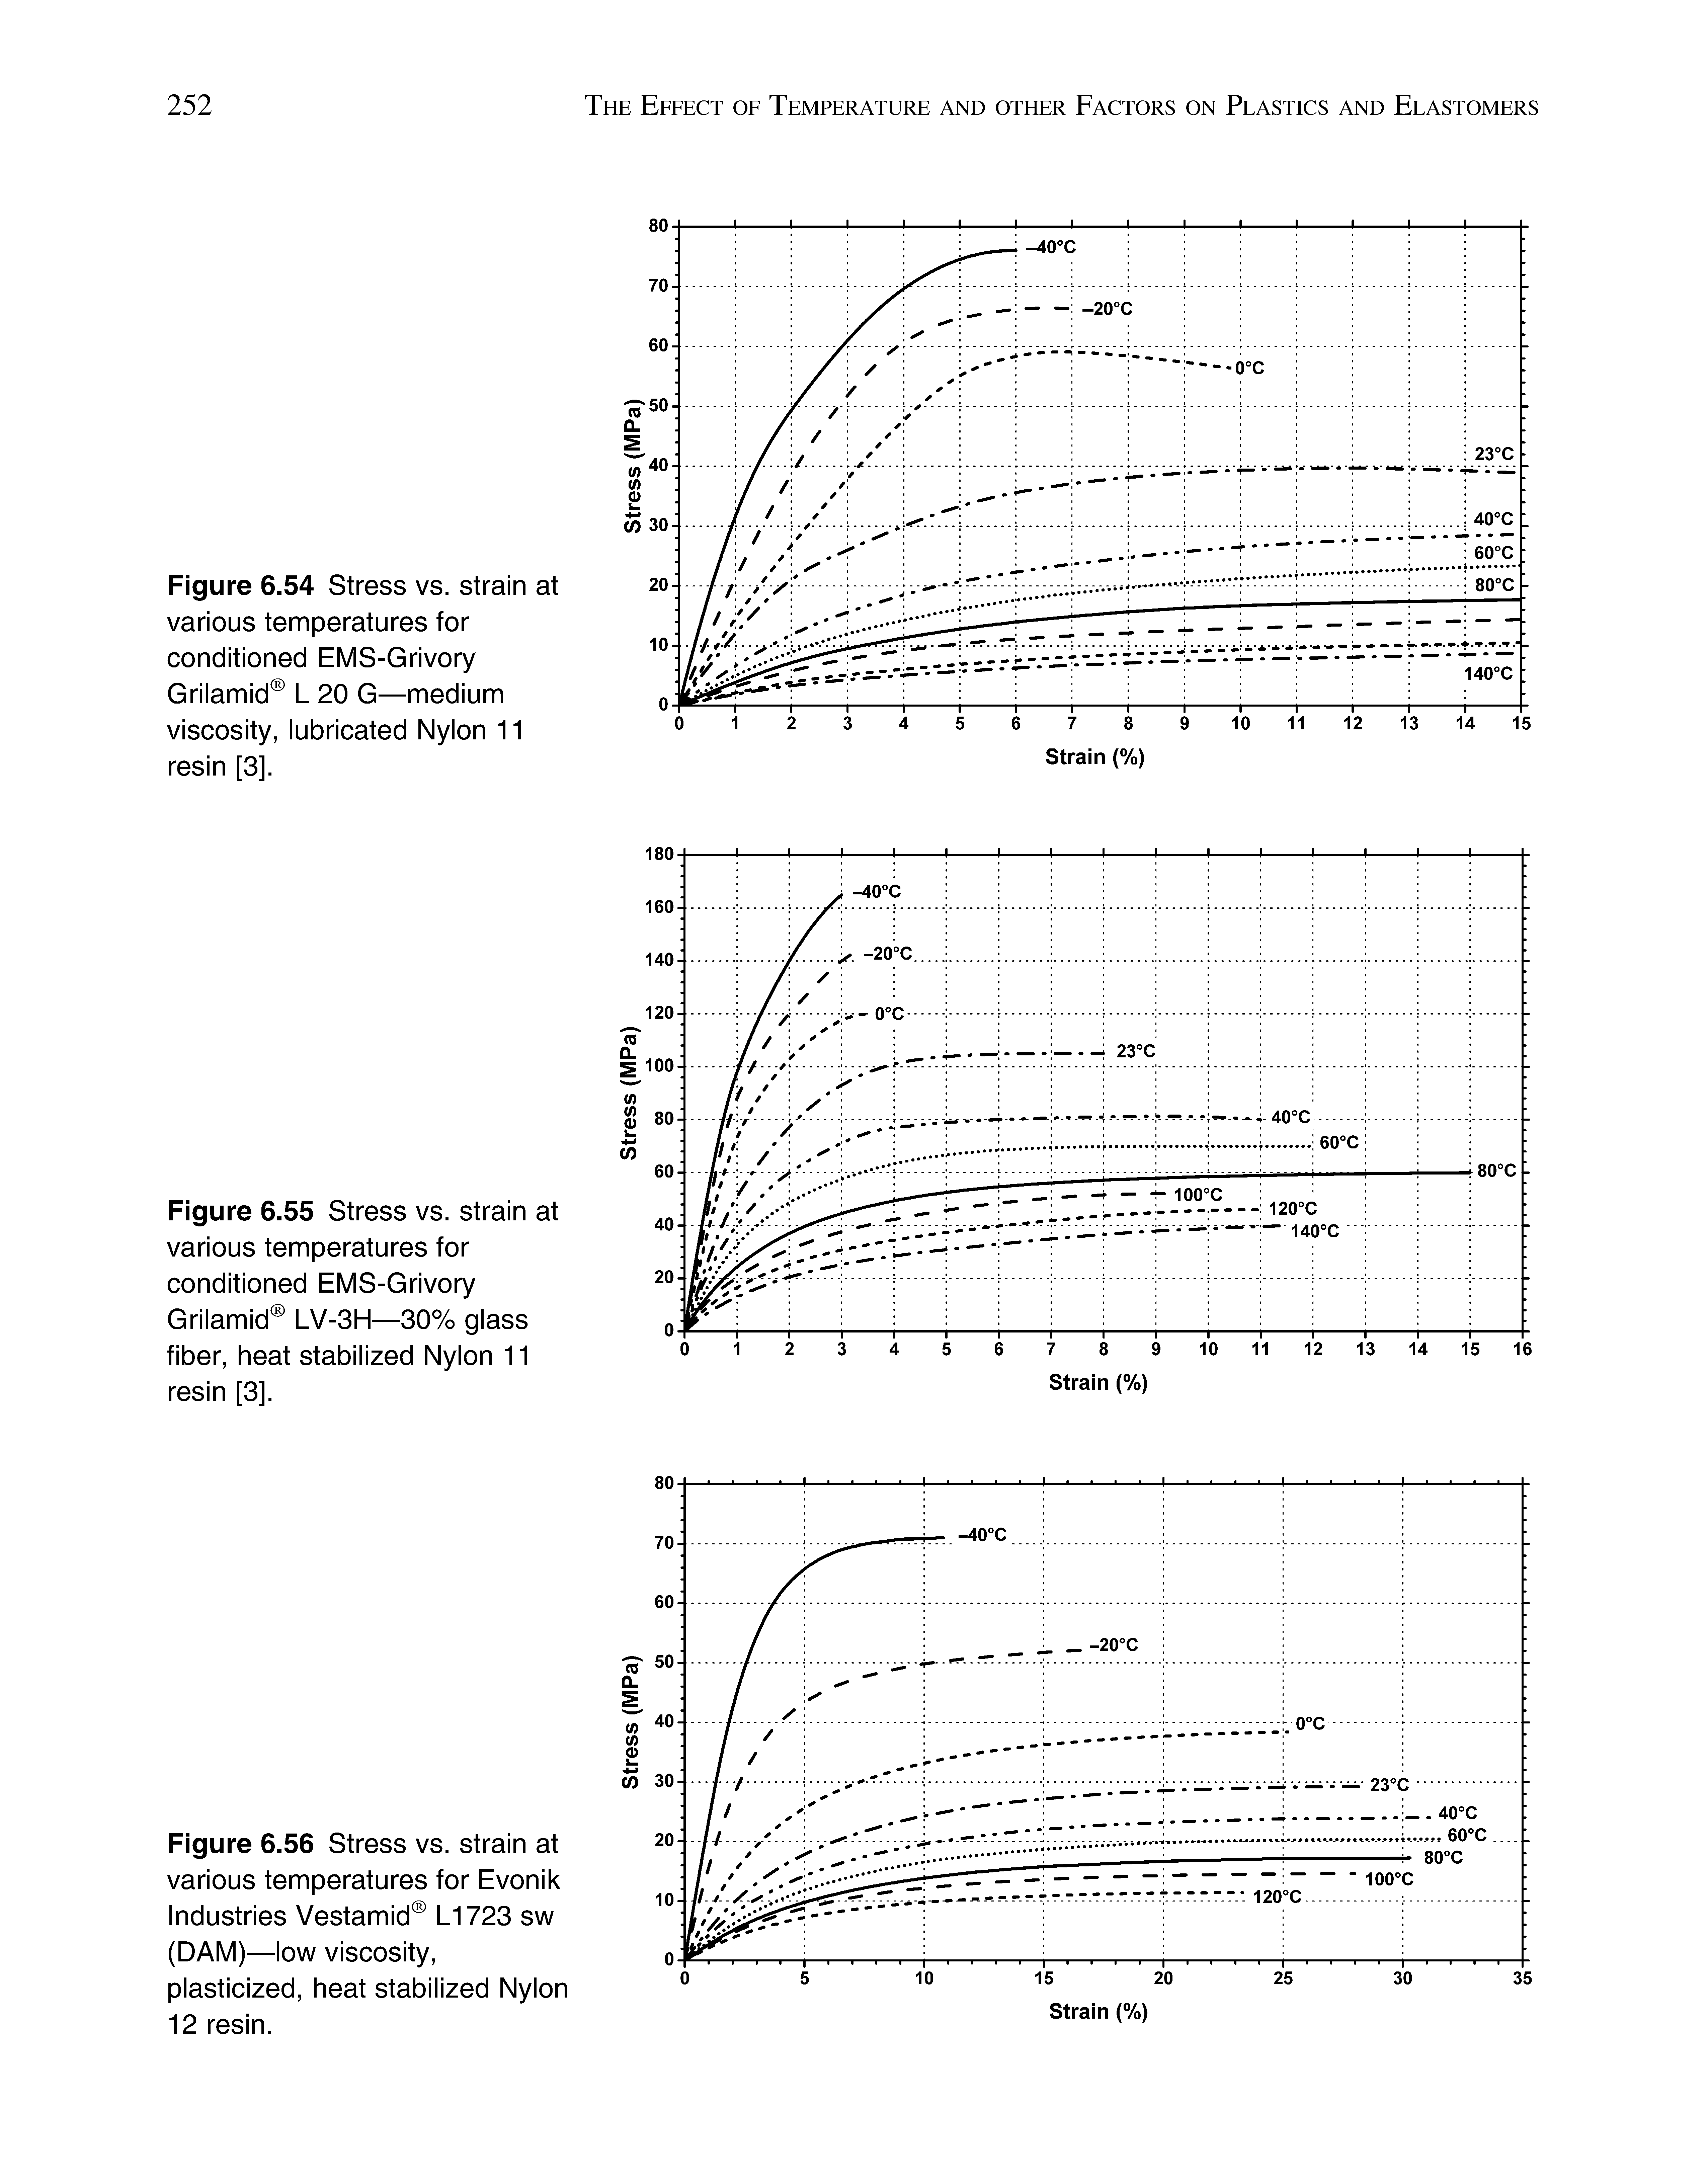 Figure 6.56 Stress vs. strain at various temperatures for Evonik Industries Vestamid L1723 sw (DAM)—low viscosity, plasticized, heat stabilized Nylon 12 resin.